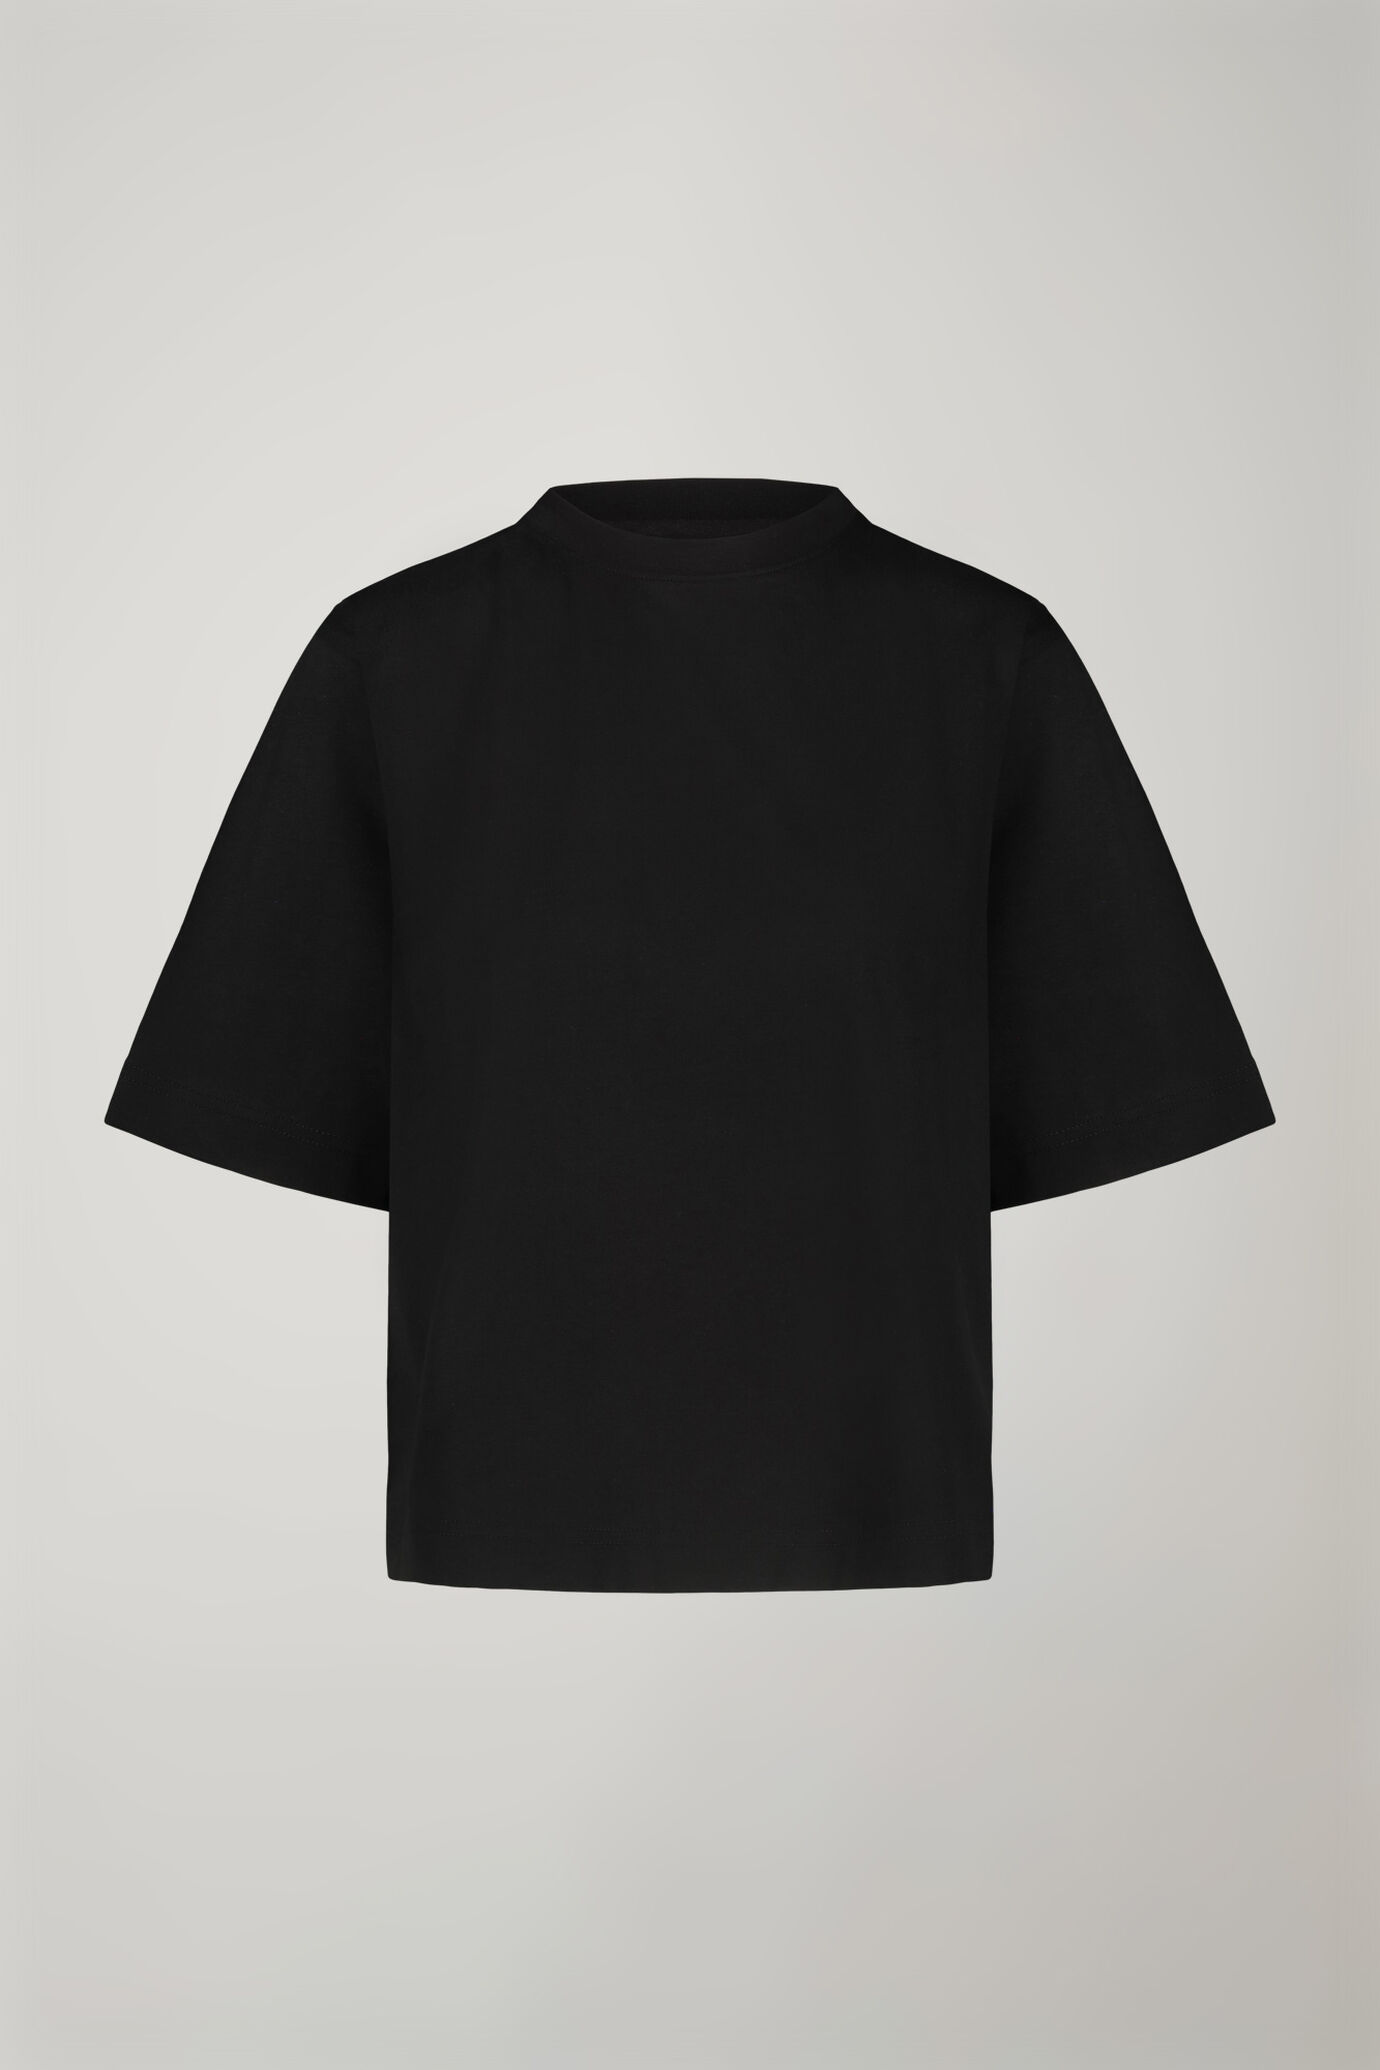 Women’s round neck t-shirt 100% cotton regular fit image number 5